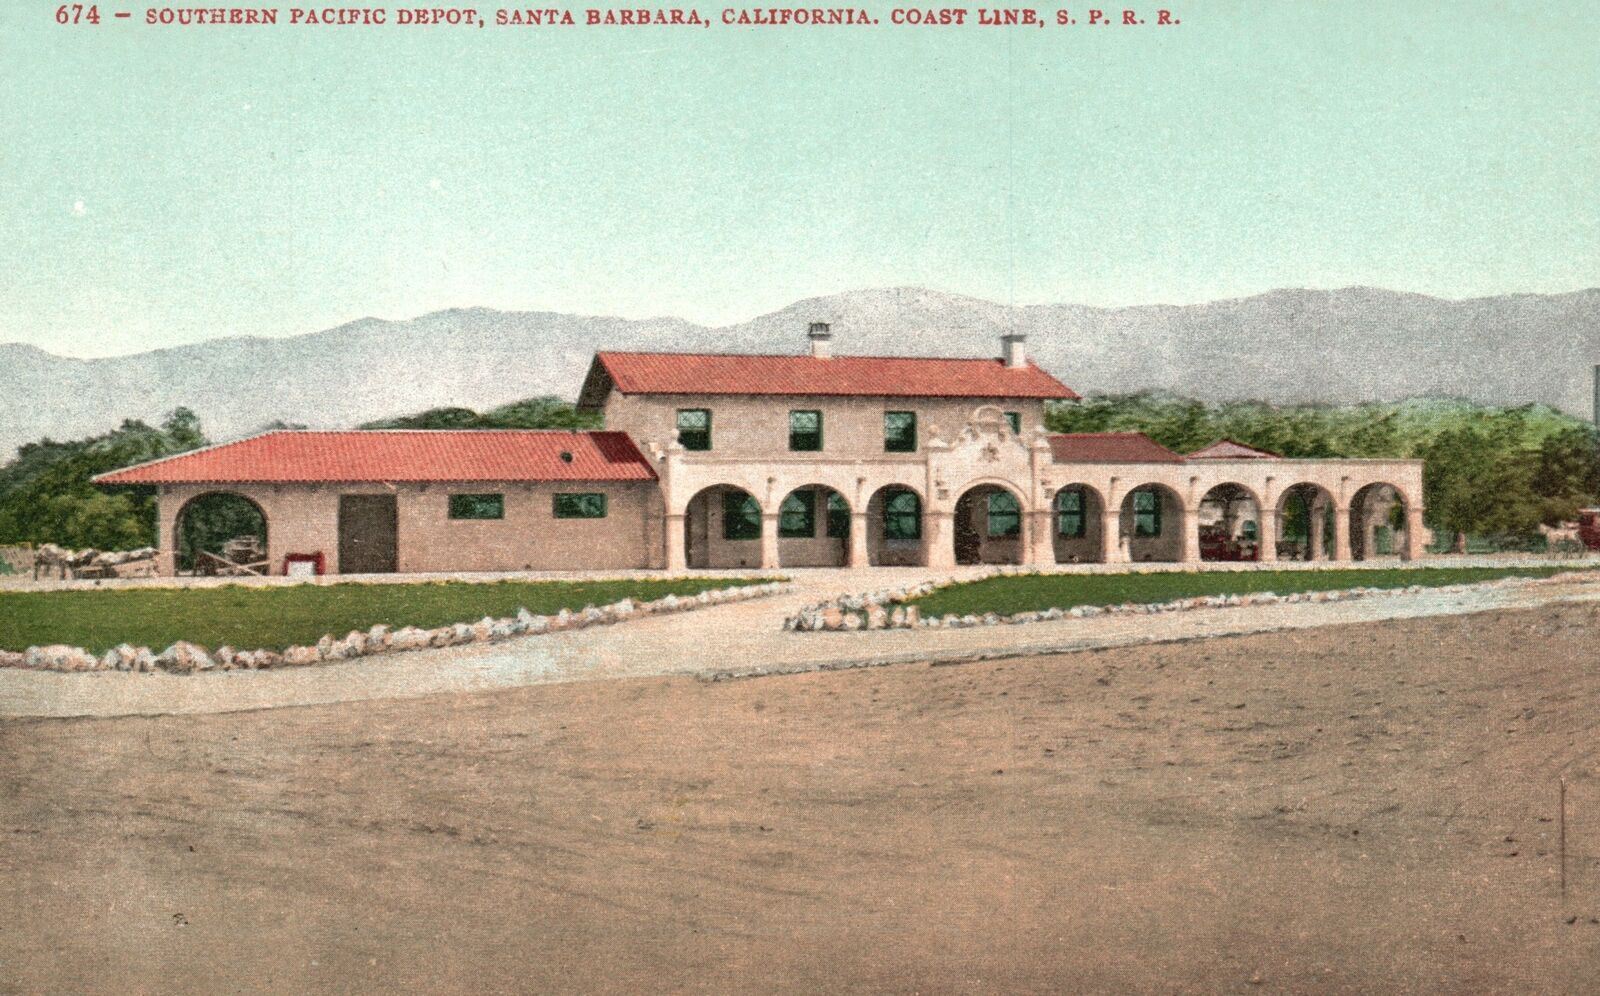 Vintage Postcard 1910\'s So. Pacific Depot Sta Barbara California Coast Line SPRR